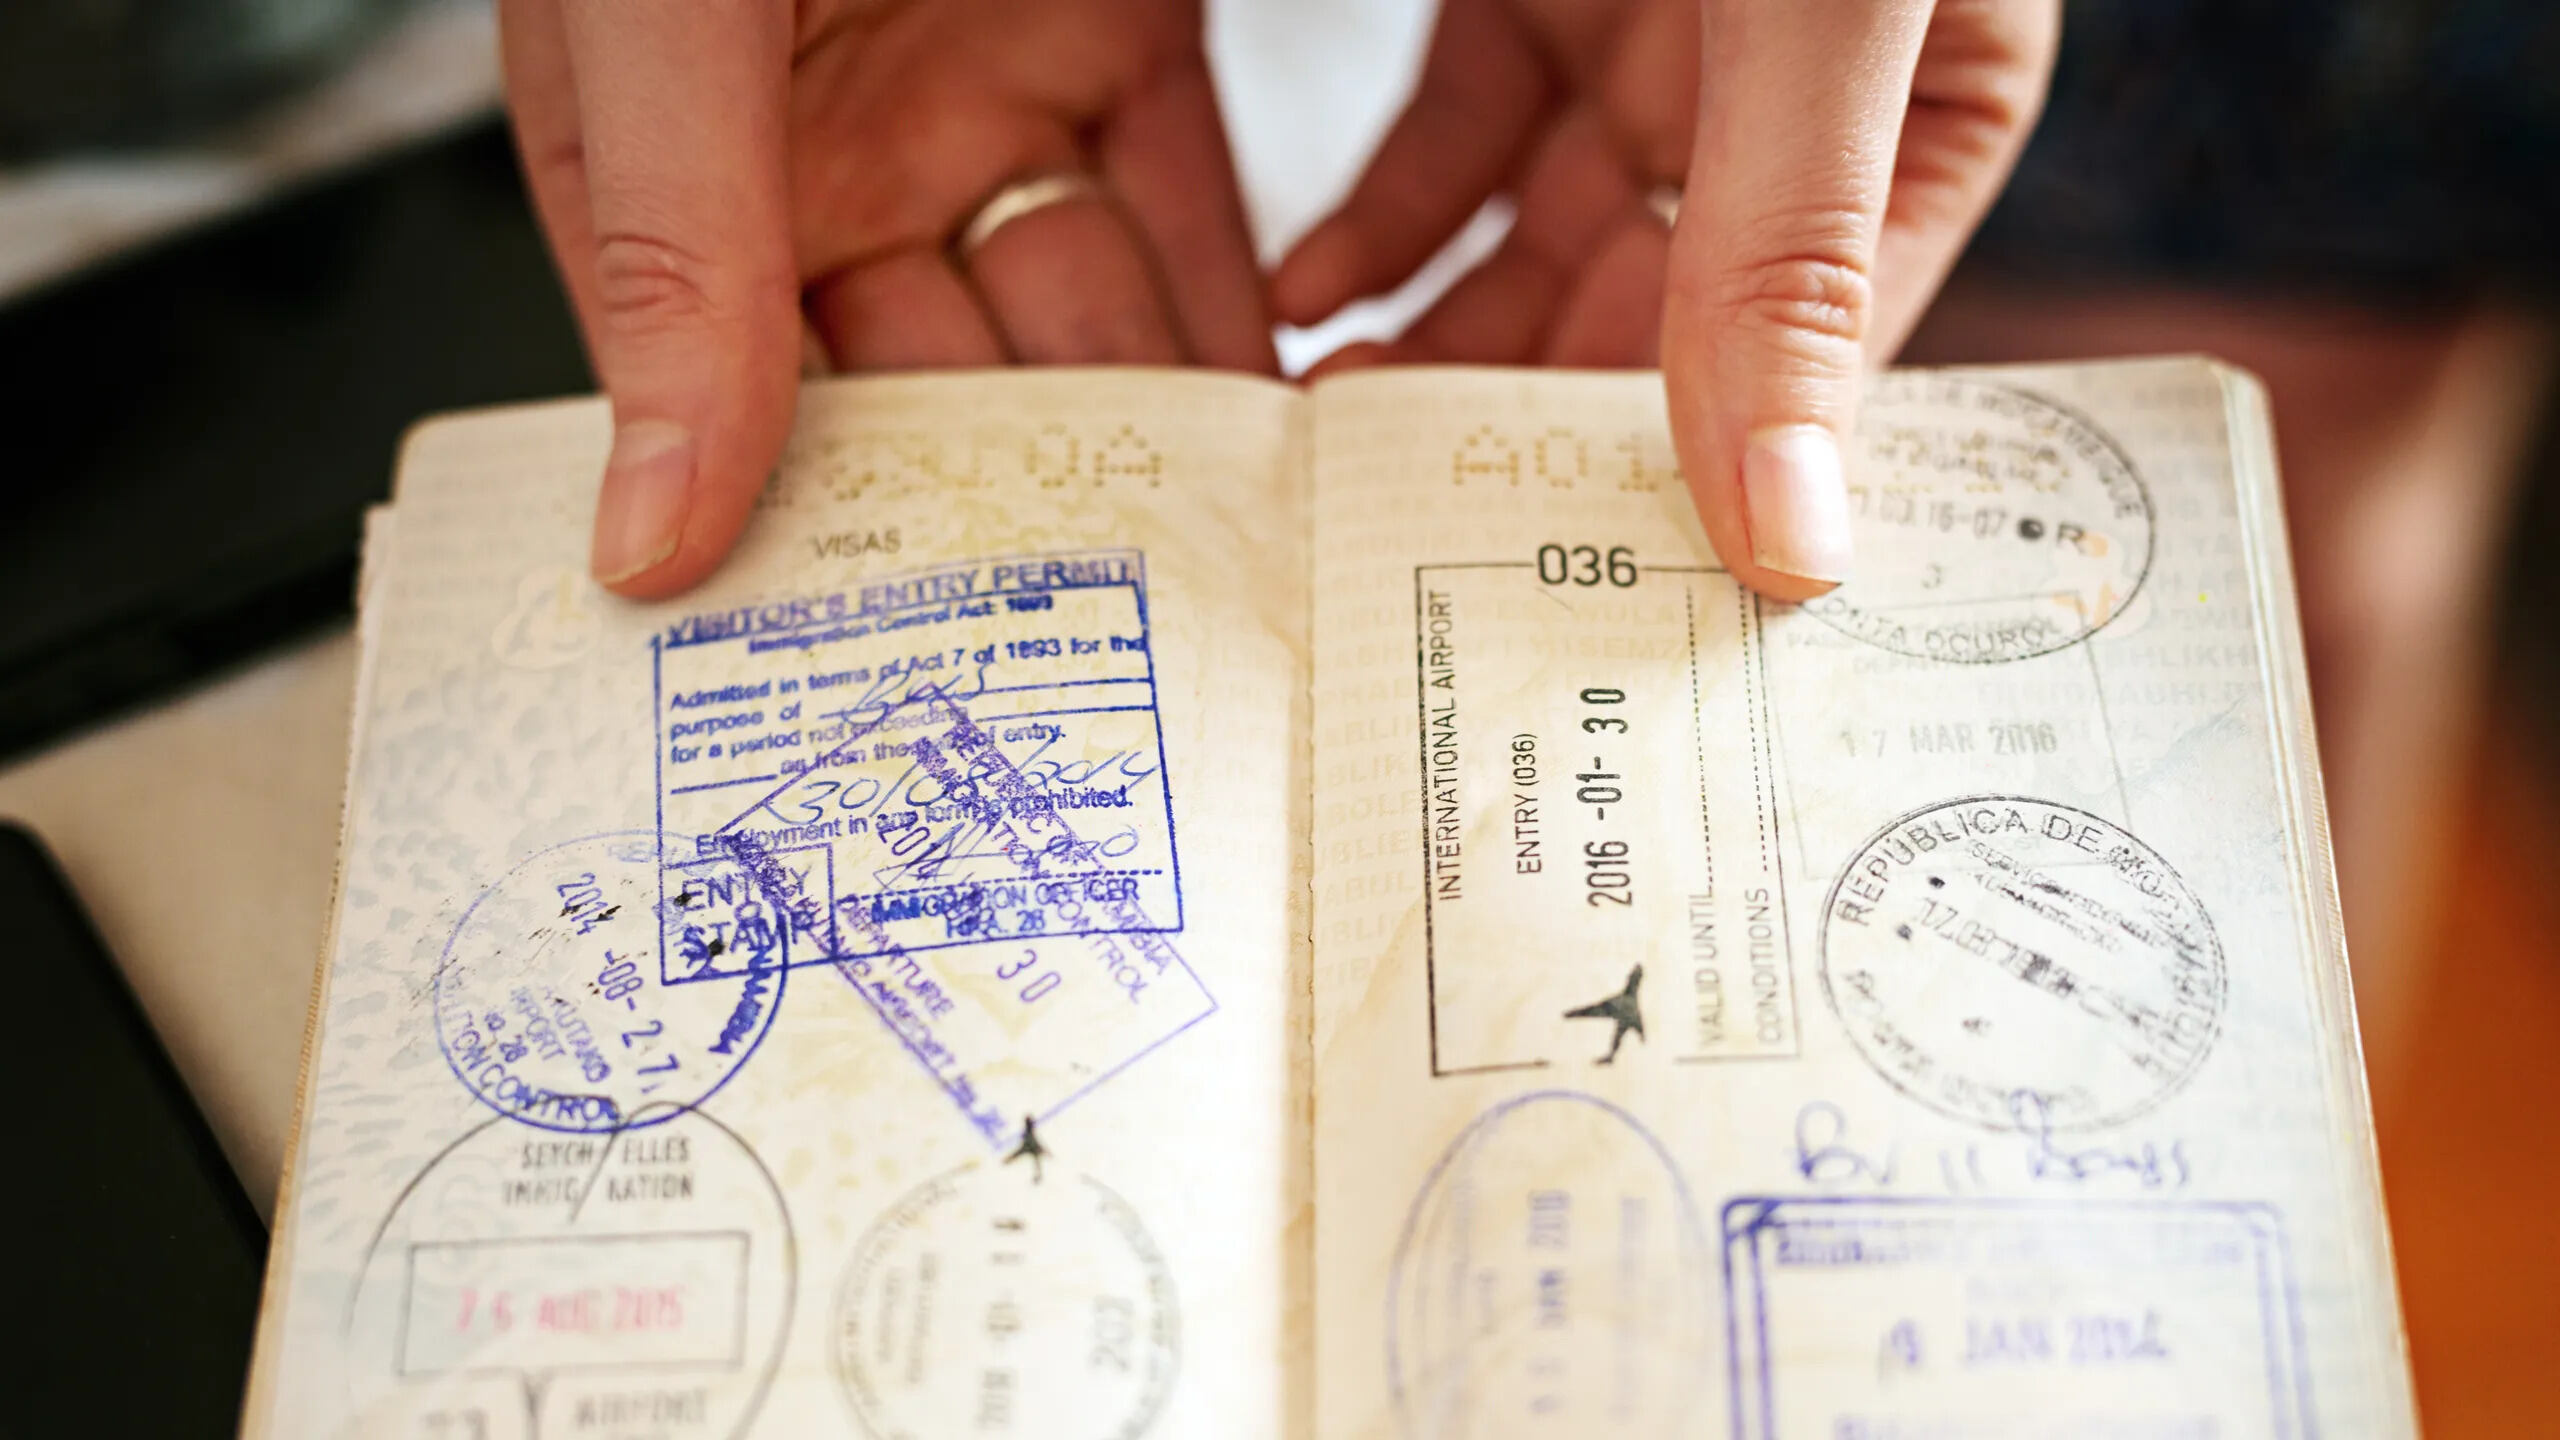 passport and travel document regulations 1996